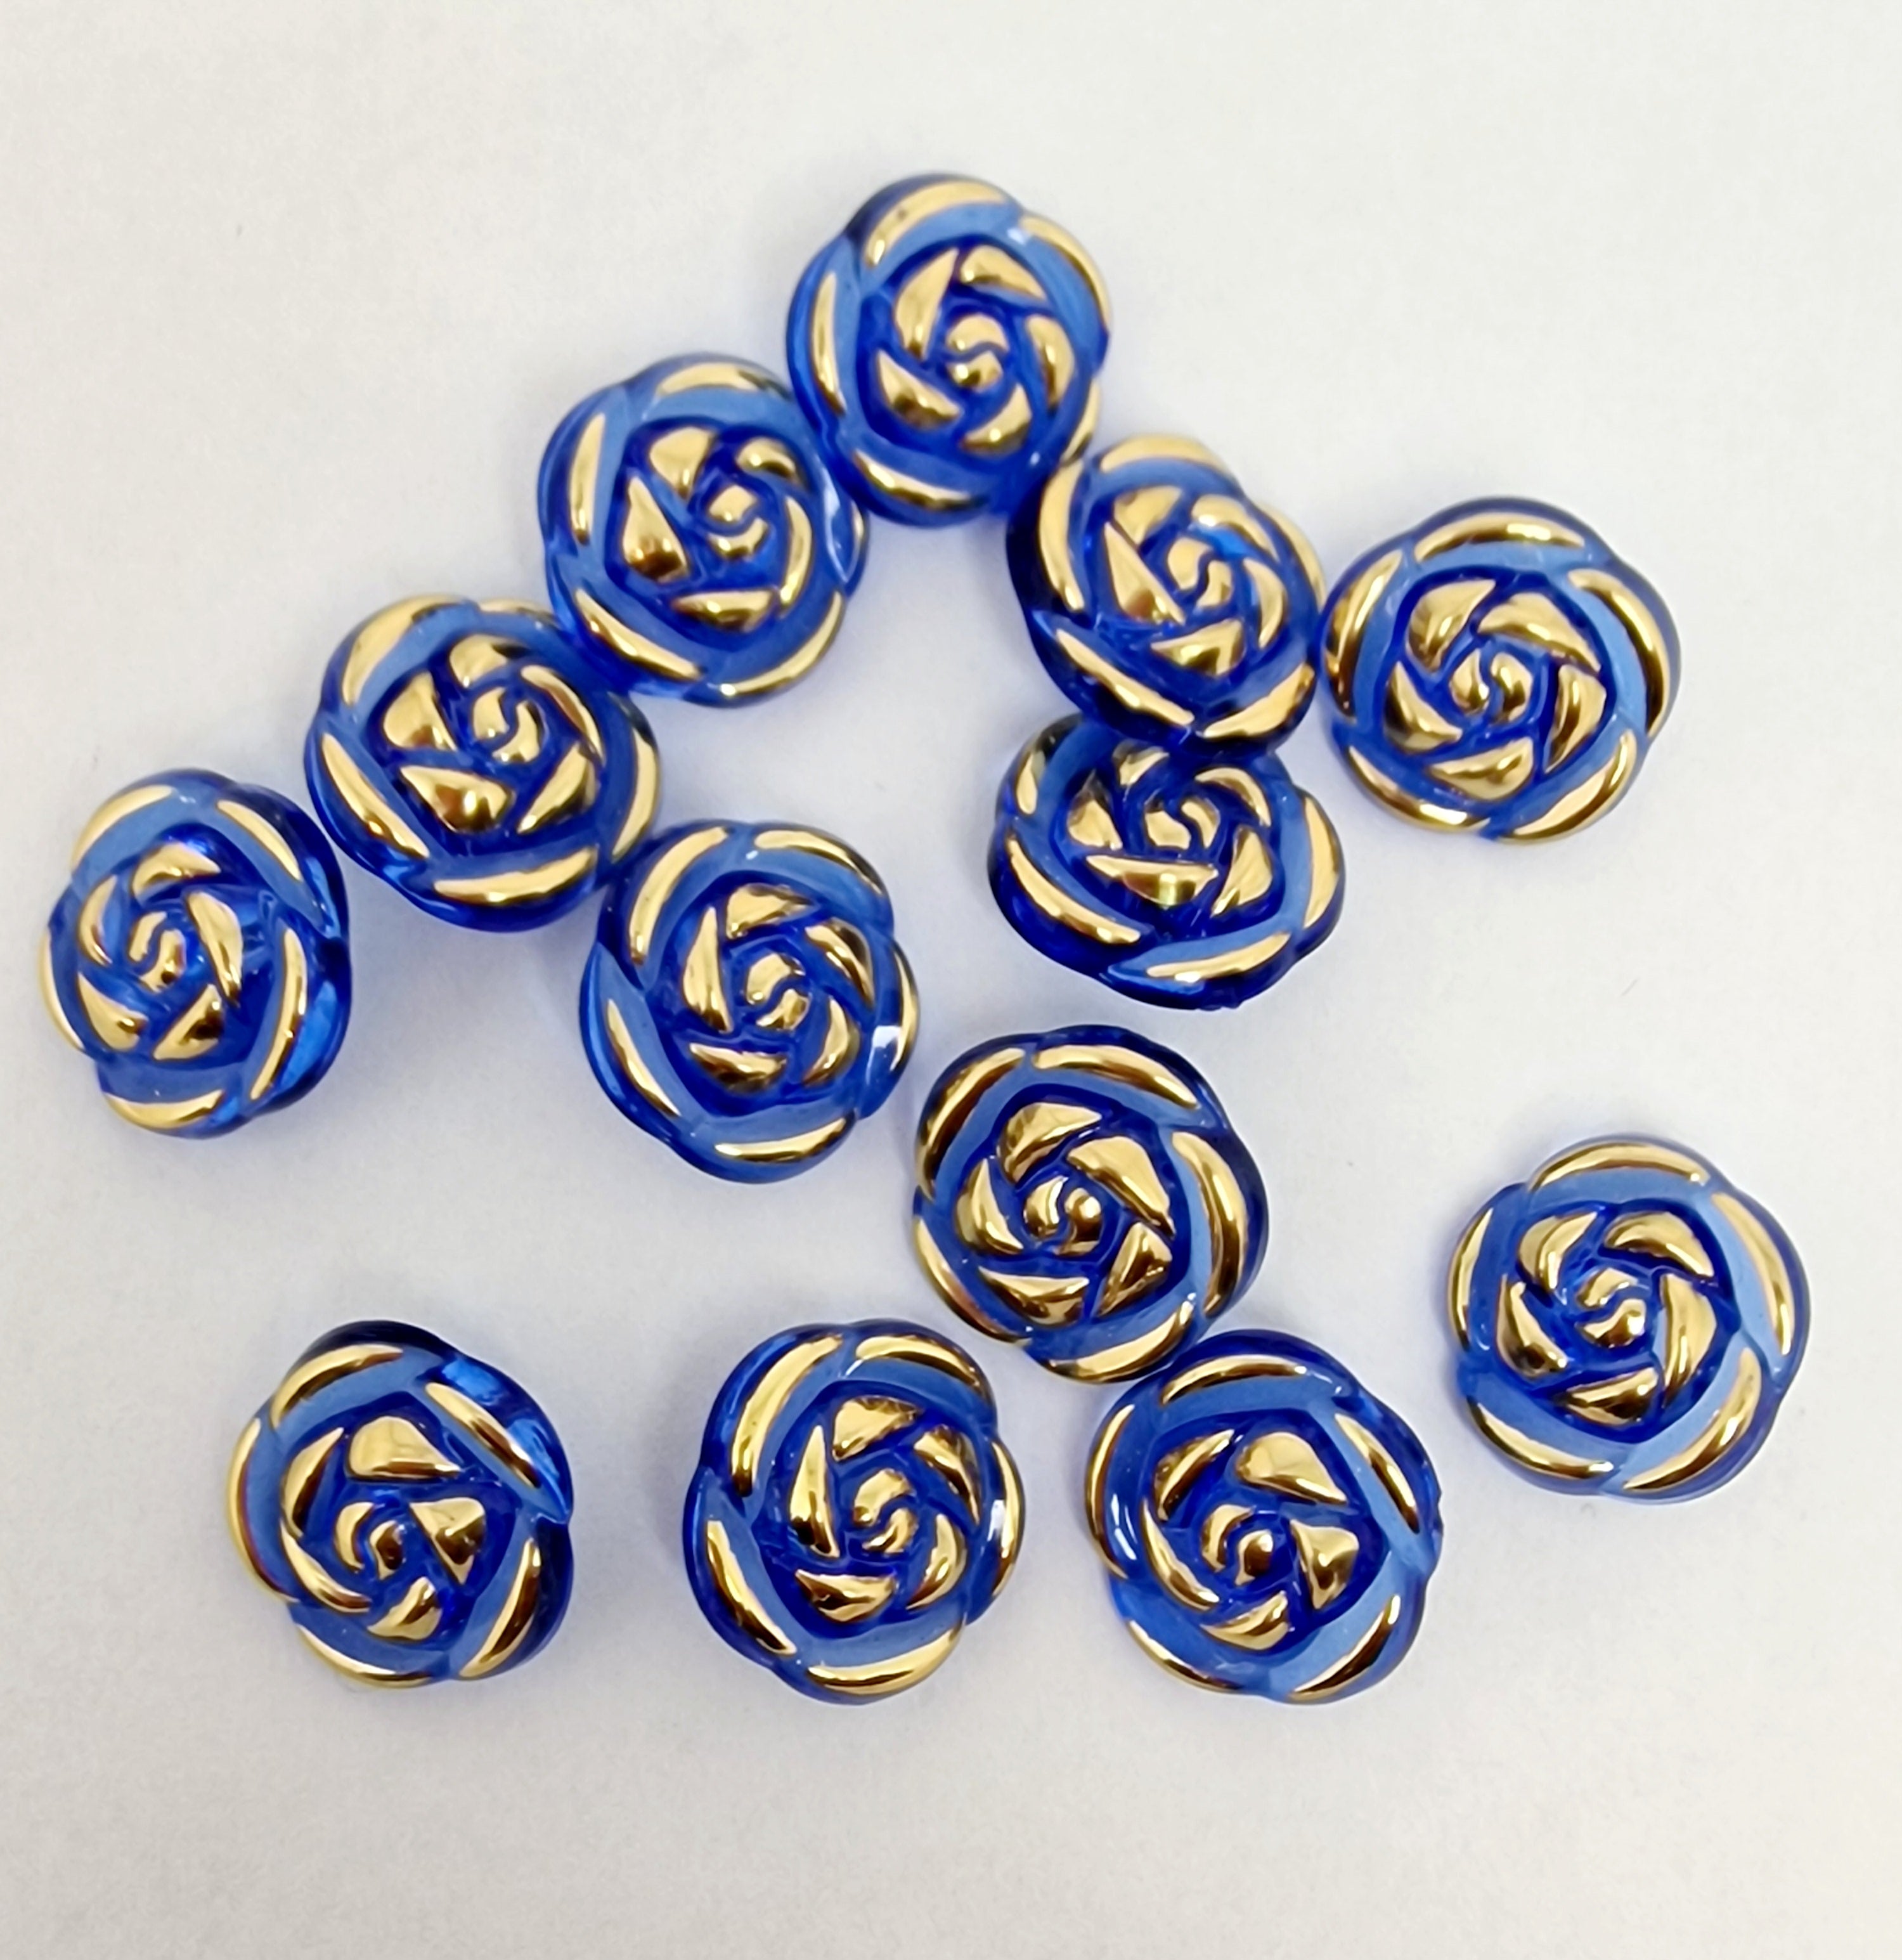 MajorCrafts 40pcs 13mm Royal Blue & Gold Rose Flower Shank Resin Buttons